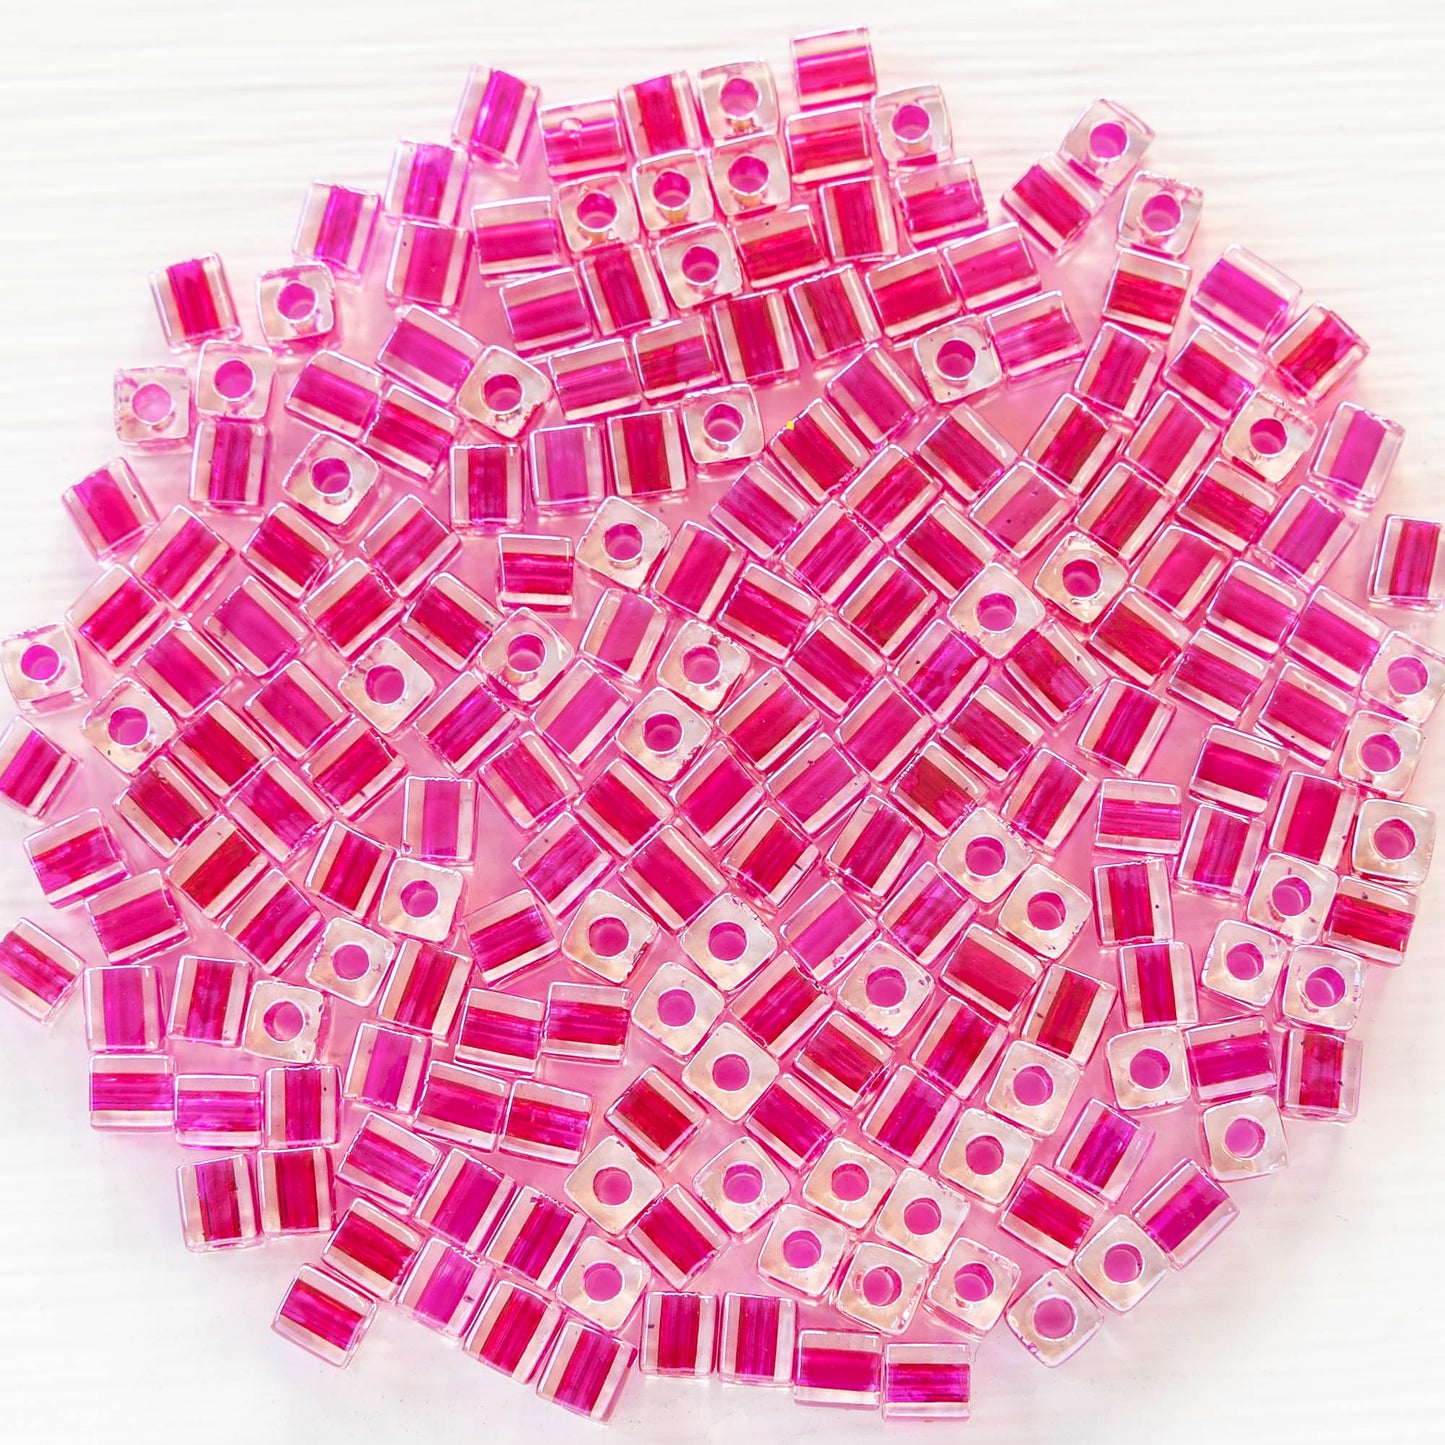 4mm Miyuki Cube Beads - Fuchsia Lined Crystal - Choose Amount